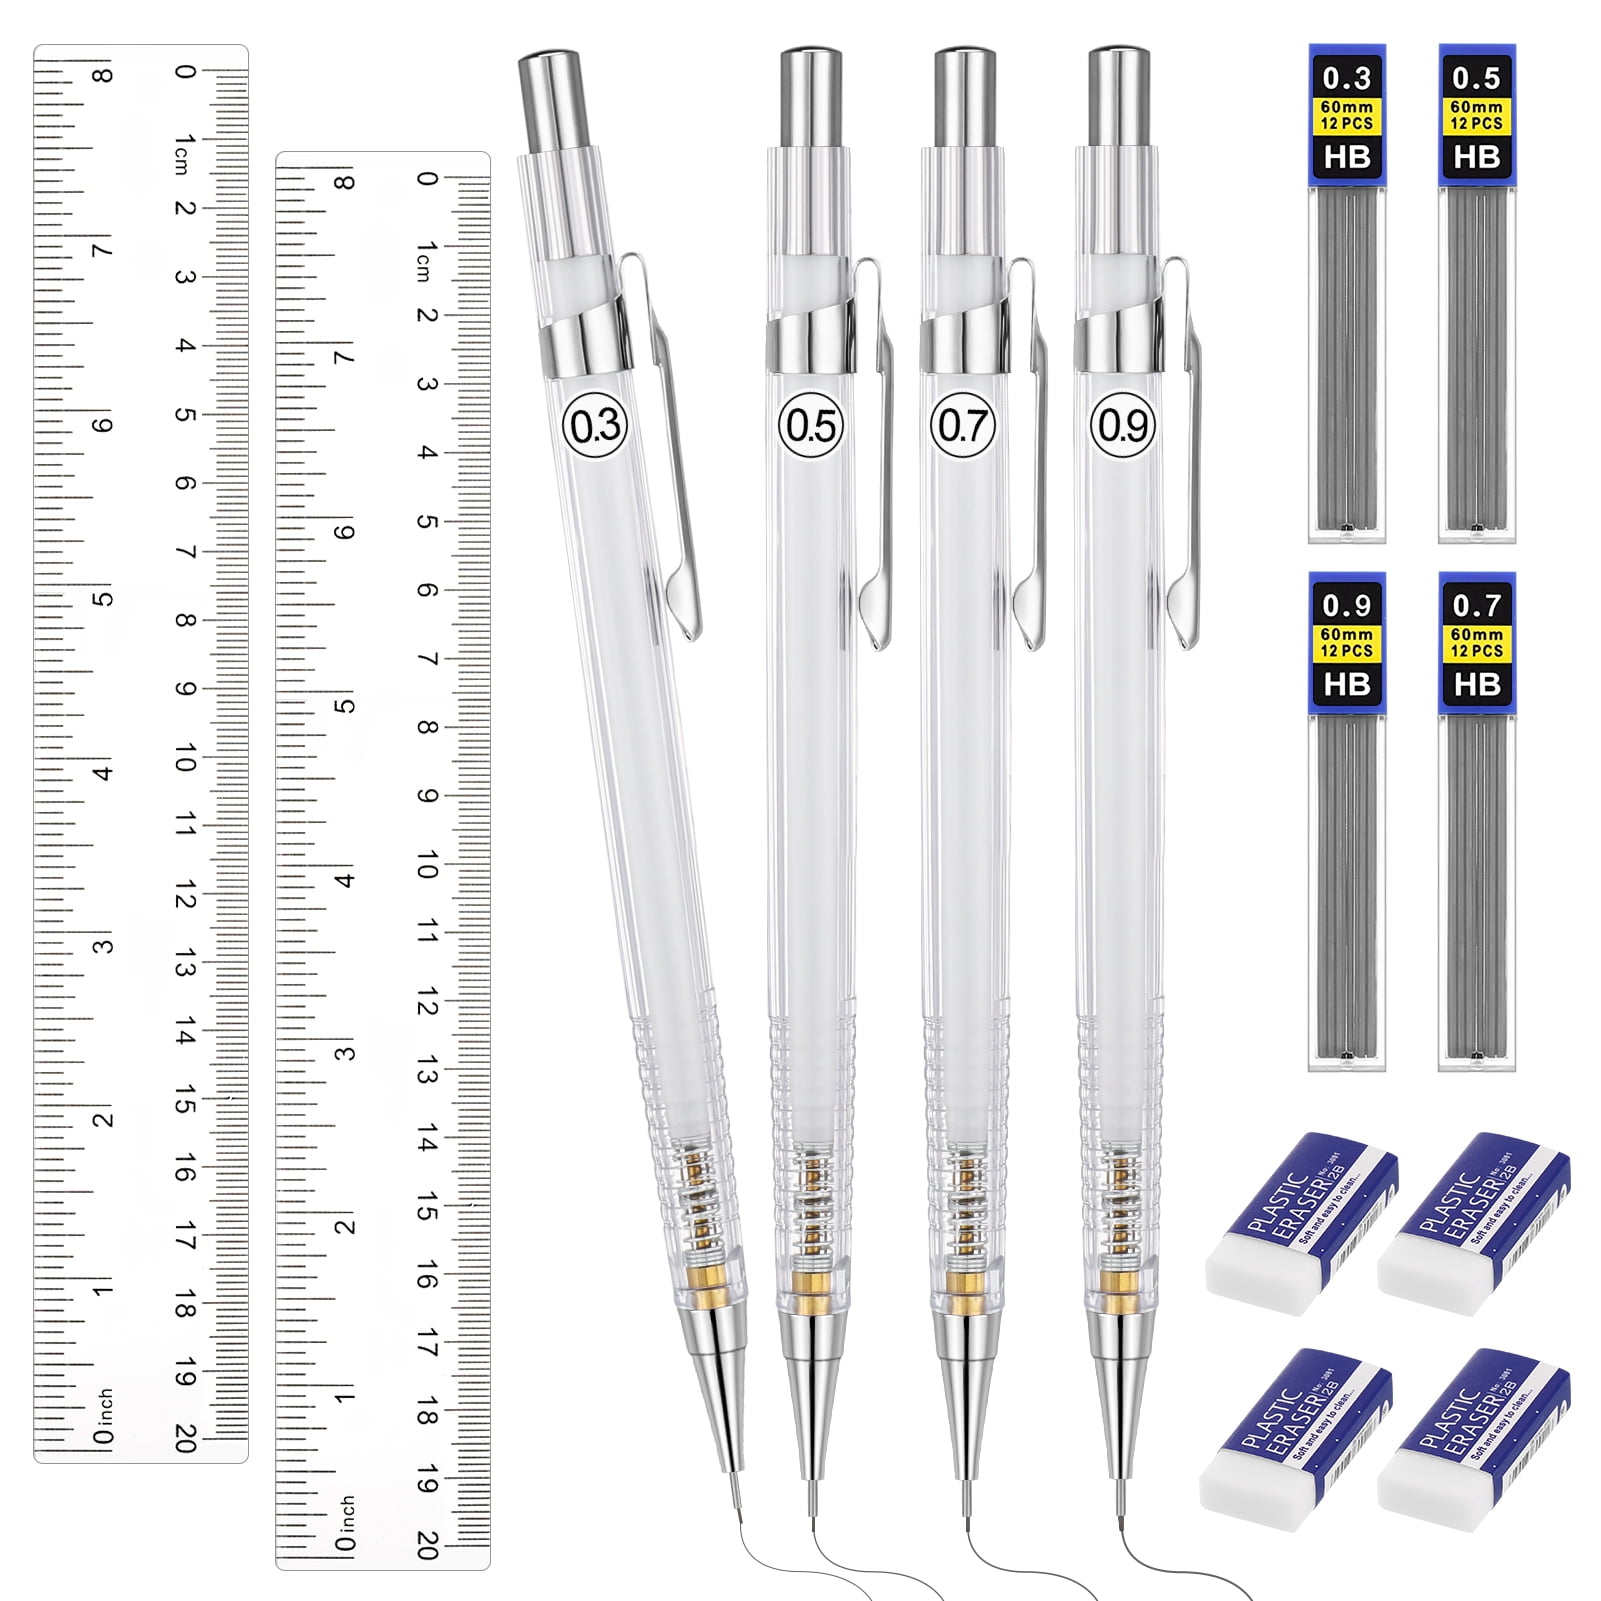 Nicpro Pastel Art Mechanical Pencil Bulk Set, 26 PCS Cute Drawing Penc